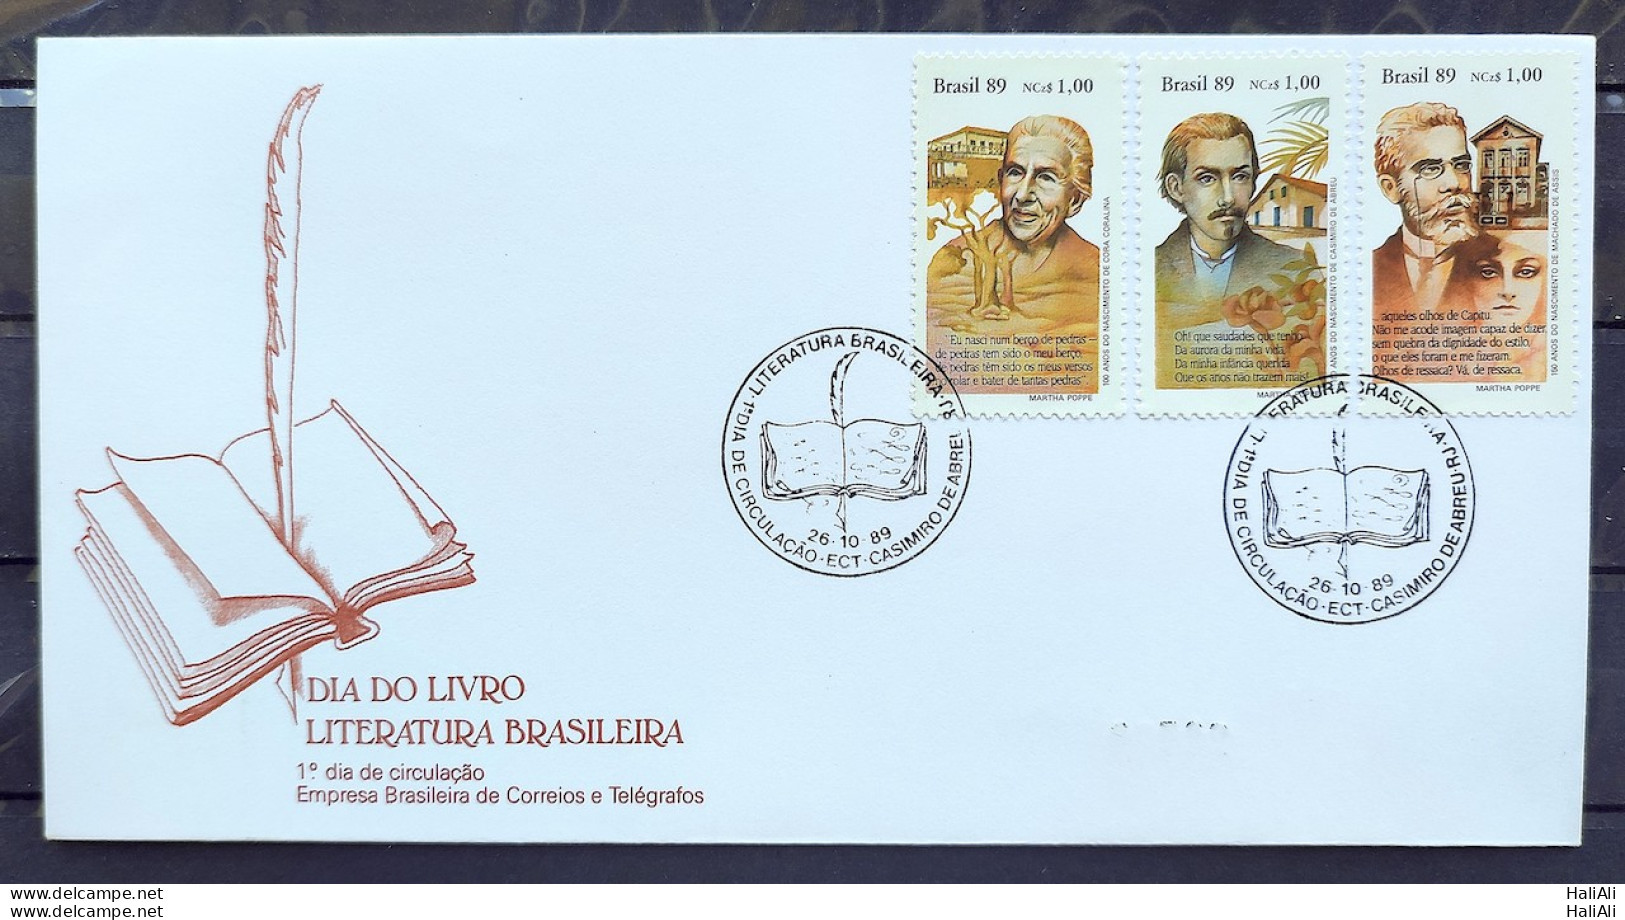 Brazil Envelope FDC 482 1989 Writers Cora Coralina Casimiro De Abreu Machado De Assis Literature CBC RJ 04 - FDC